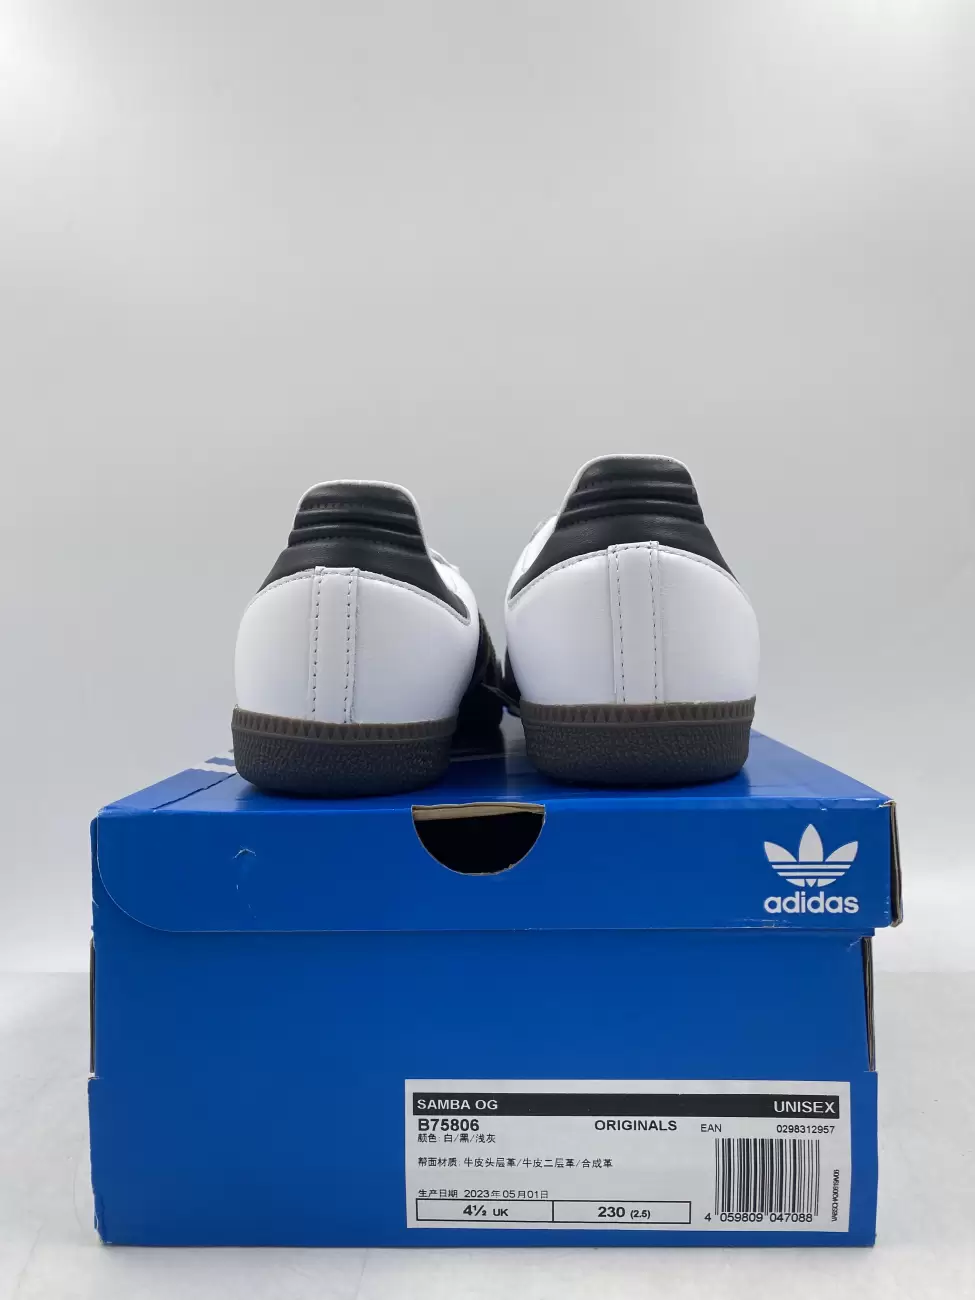 36399 - Adidas Samba OG Cloud White Core Black | Item Details - AfterMarket